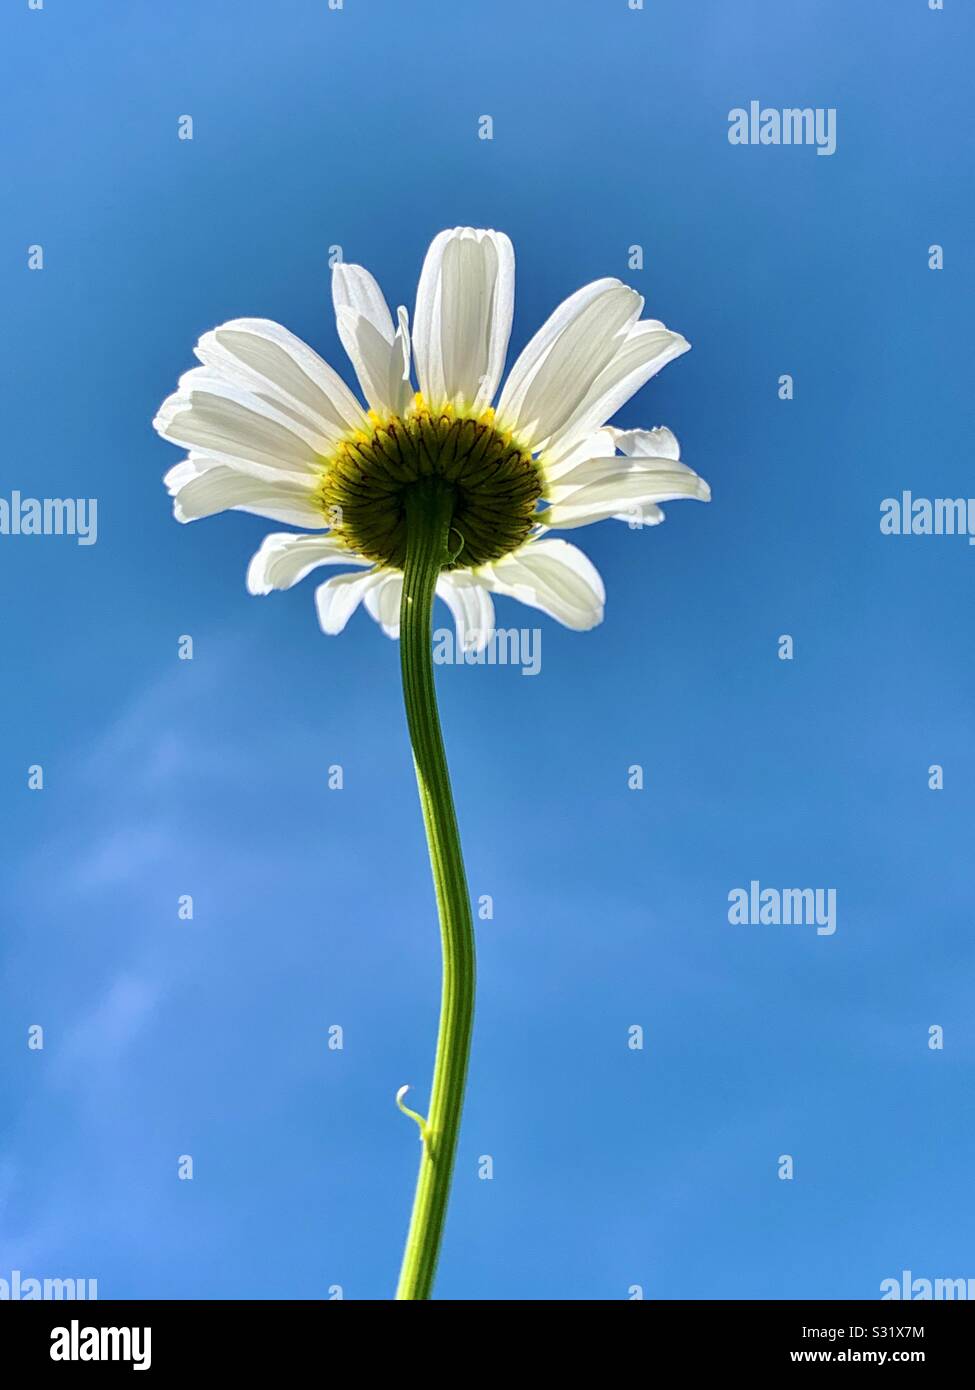 Daisy isolated on blue sky Stock Photo